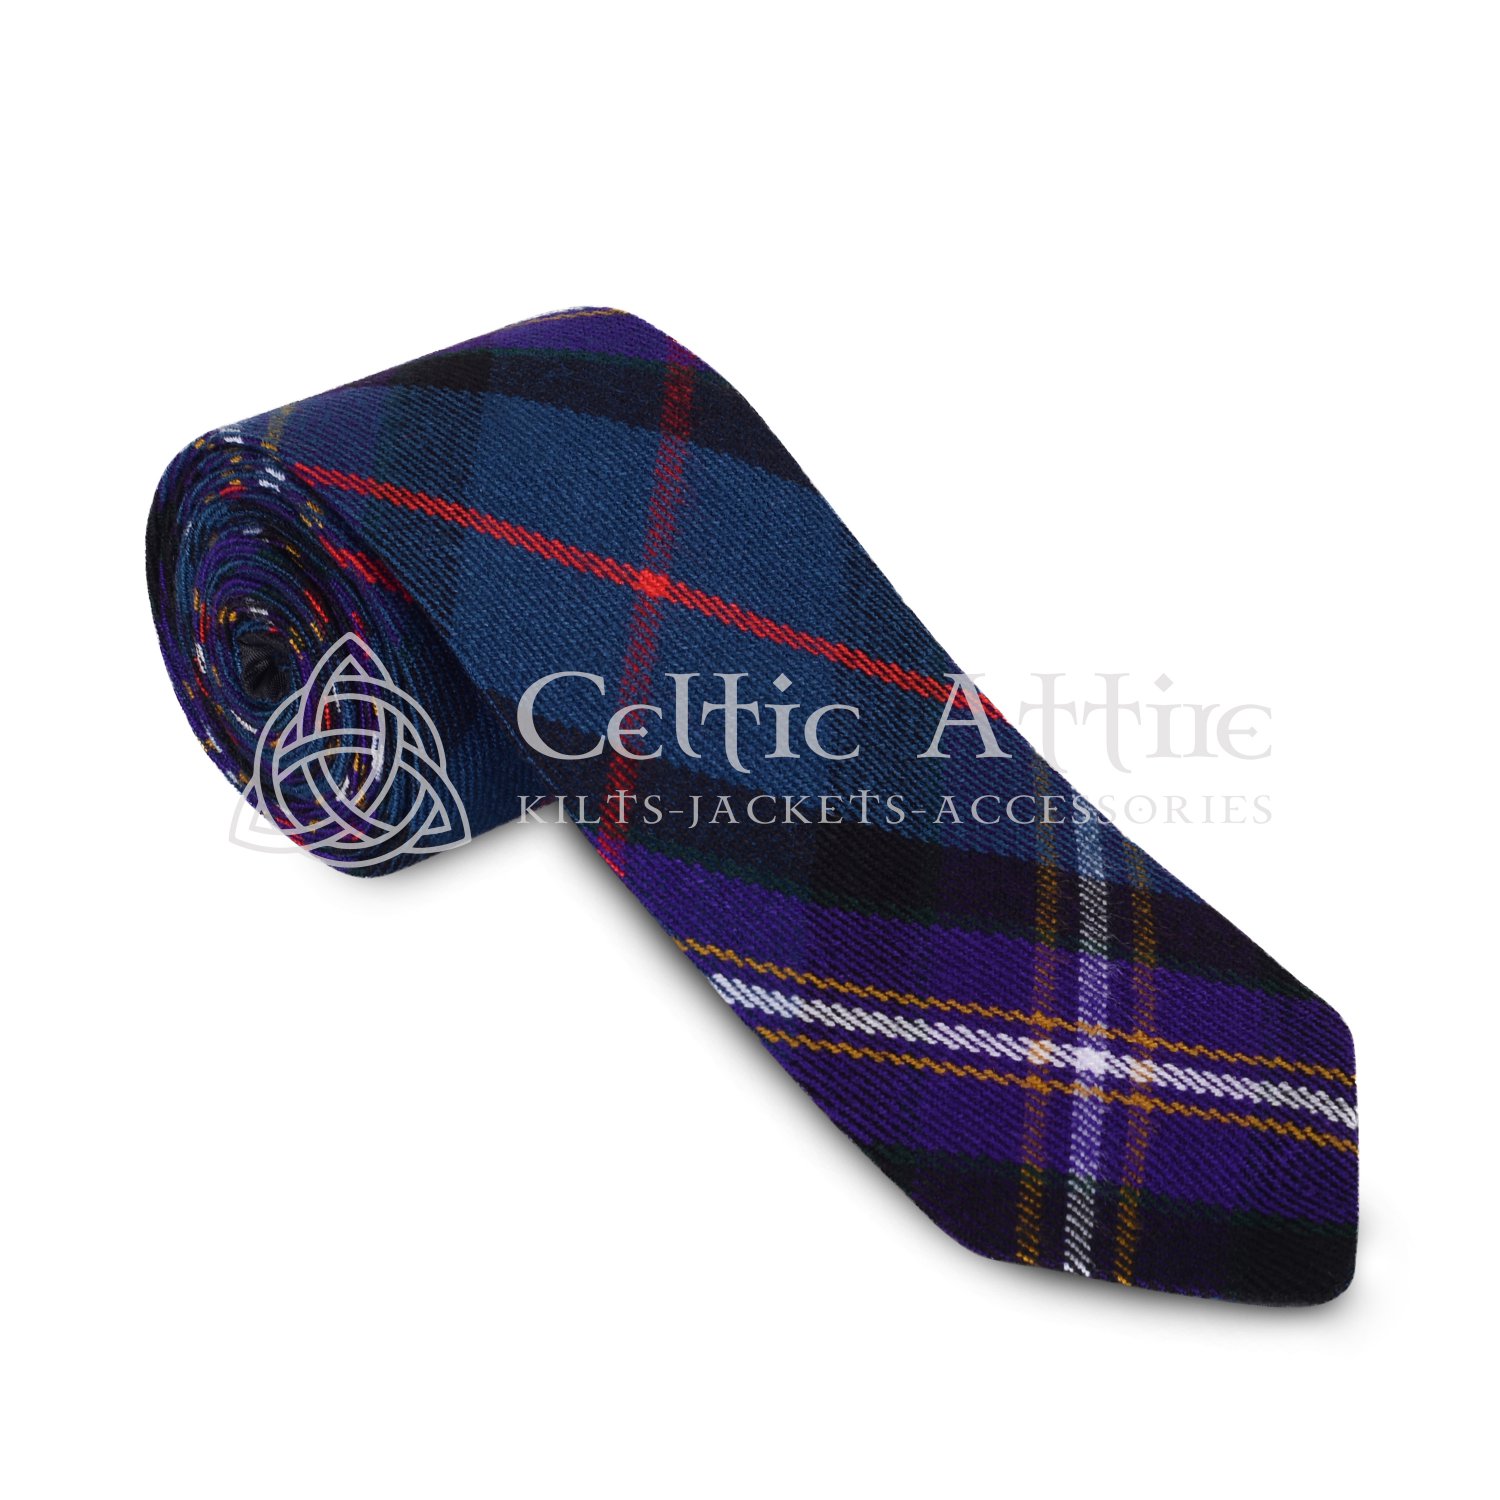 MASONIC Tartan Tie - Scottish Kilt Tie Traditional tartan Kilt Neck Tie for men